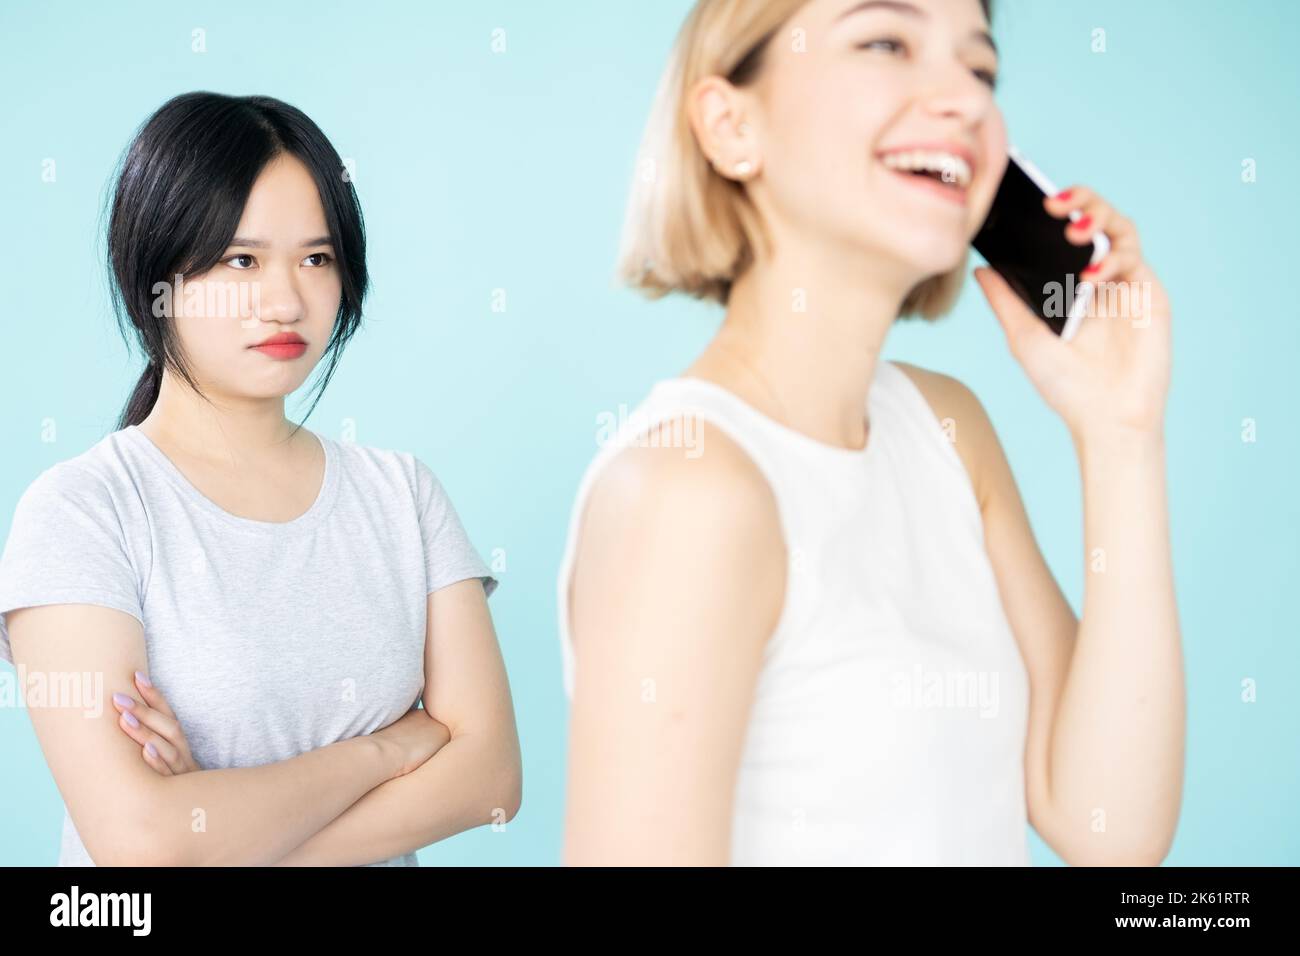 female friendship jealousy relationship ethnic Stock Photo